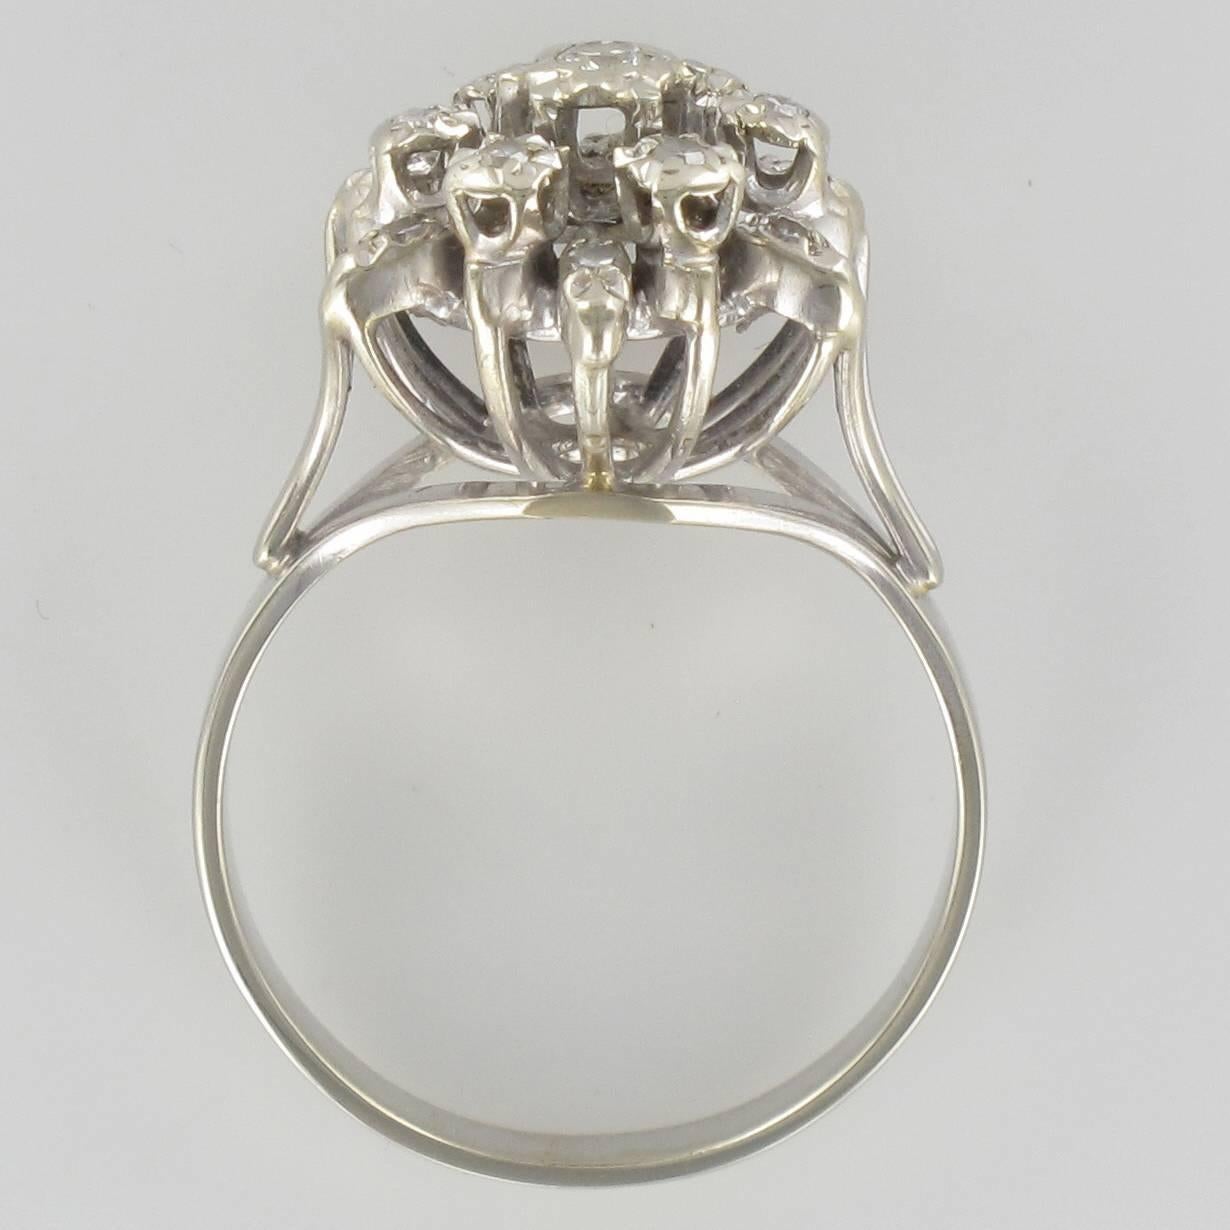 snowflake diamond ring